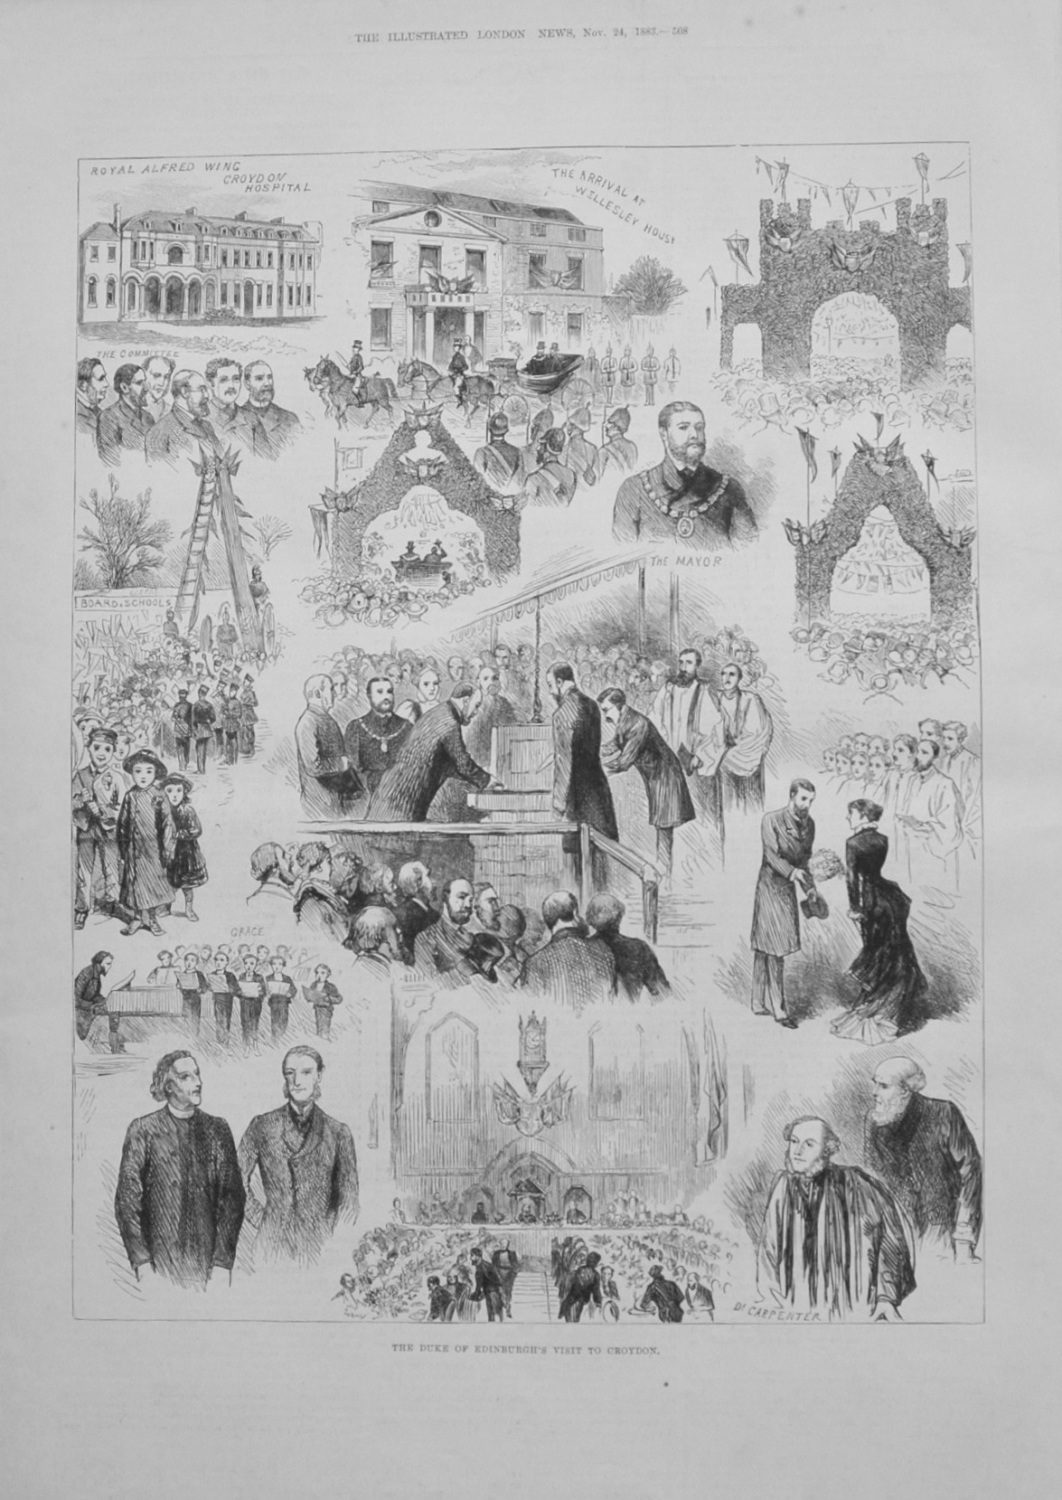 Duke of Edinburgh visit to Croydon - 1883